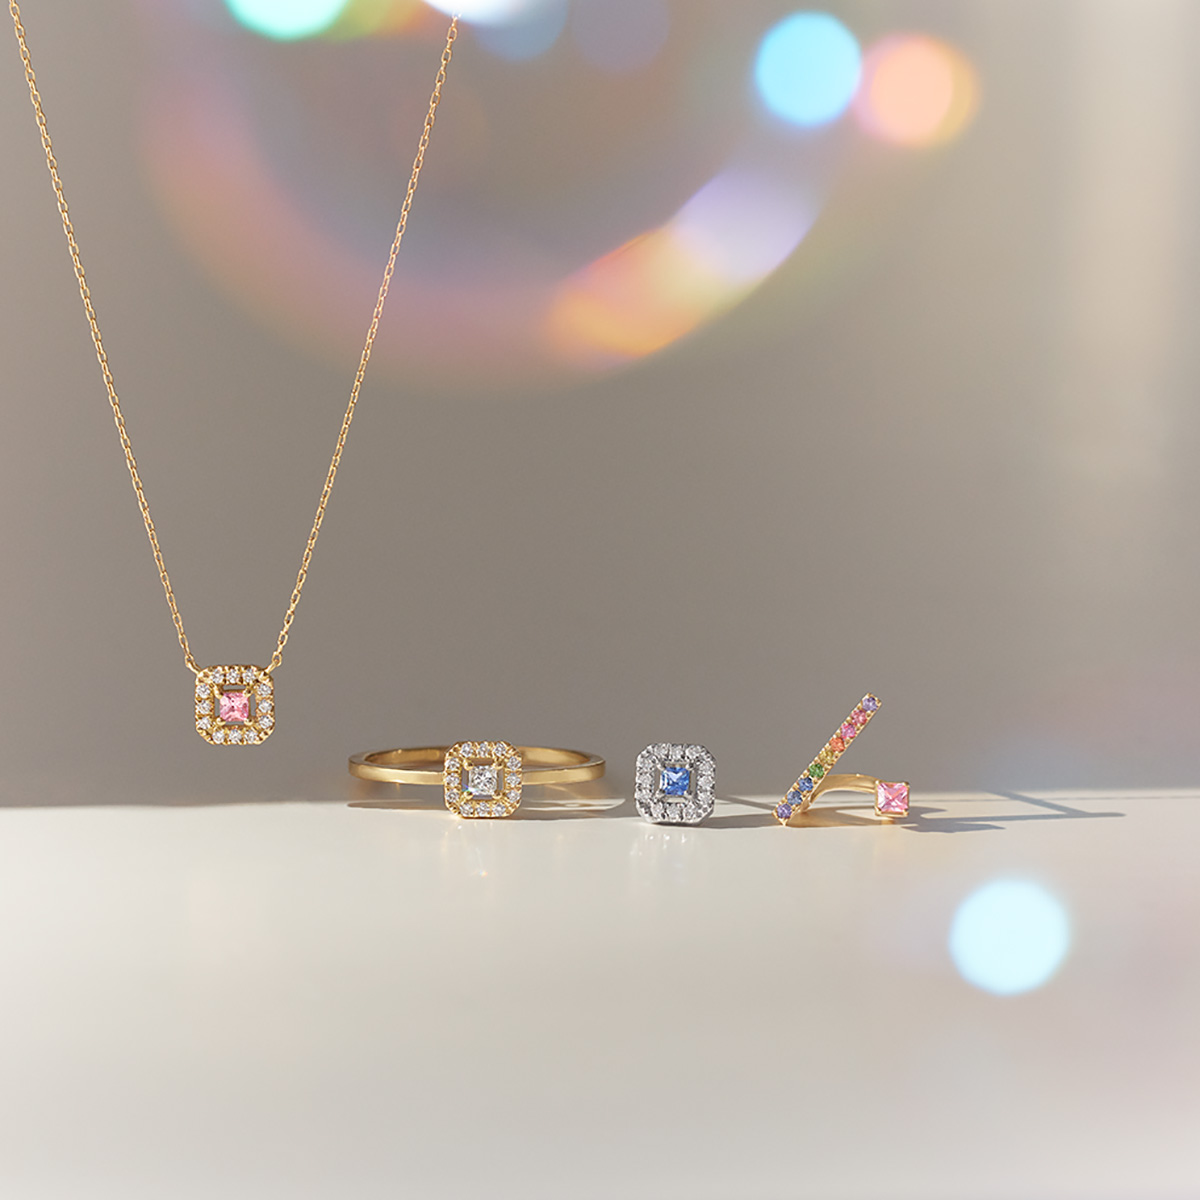 tina coffret necklace (pink sapphire)